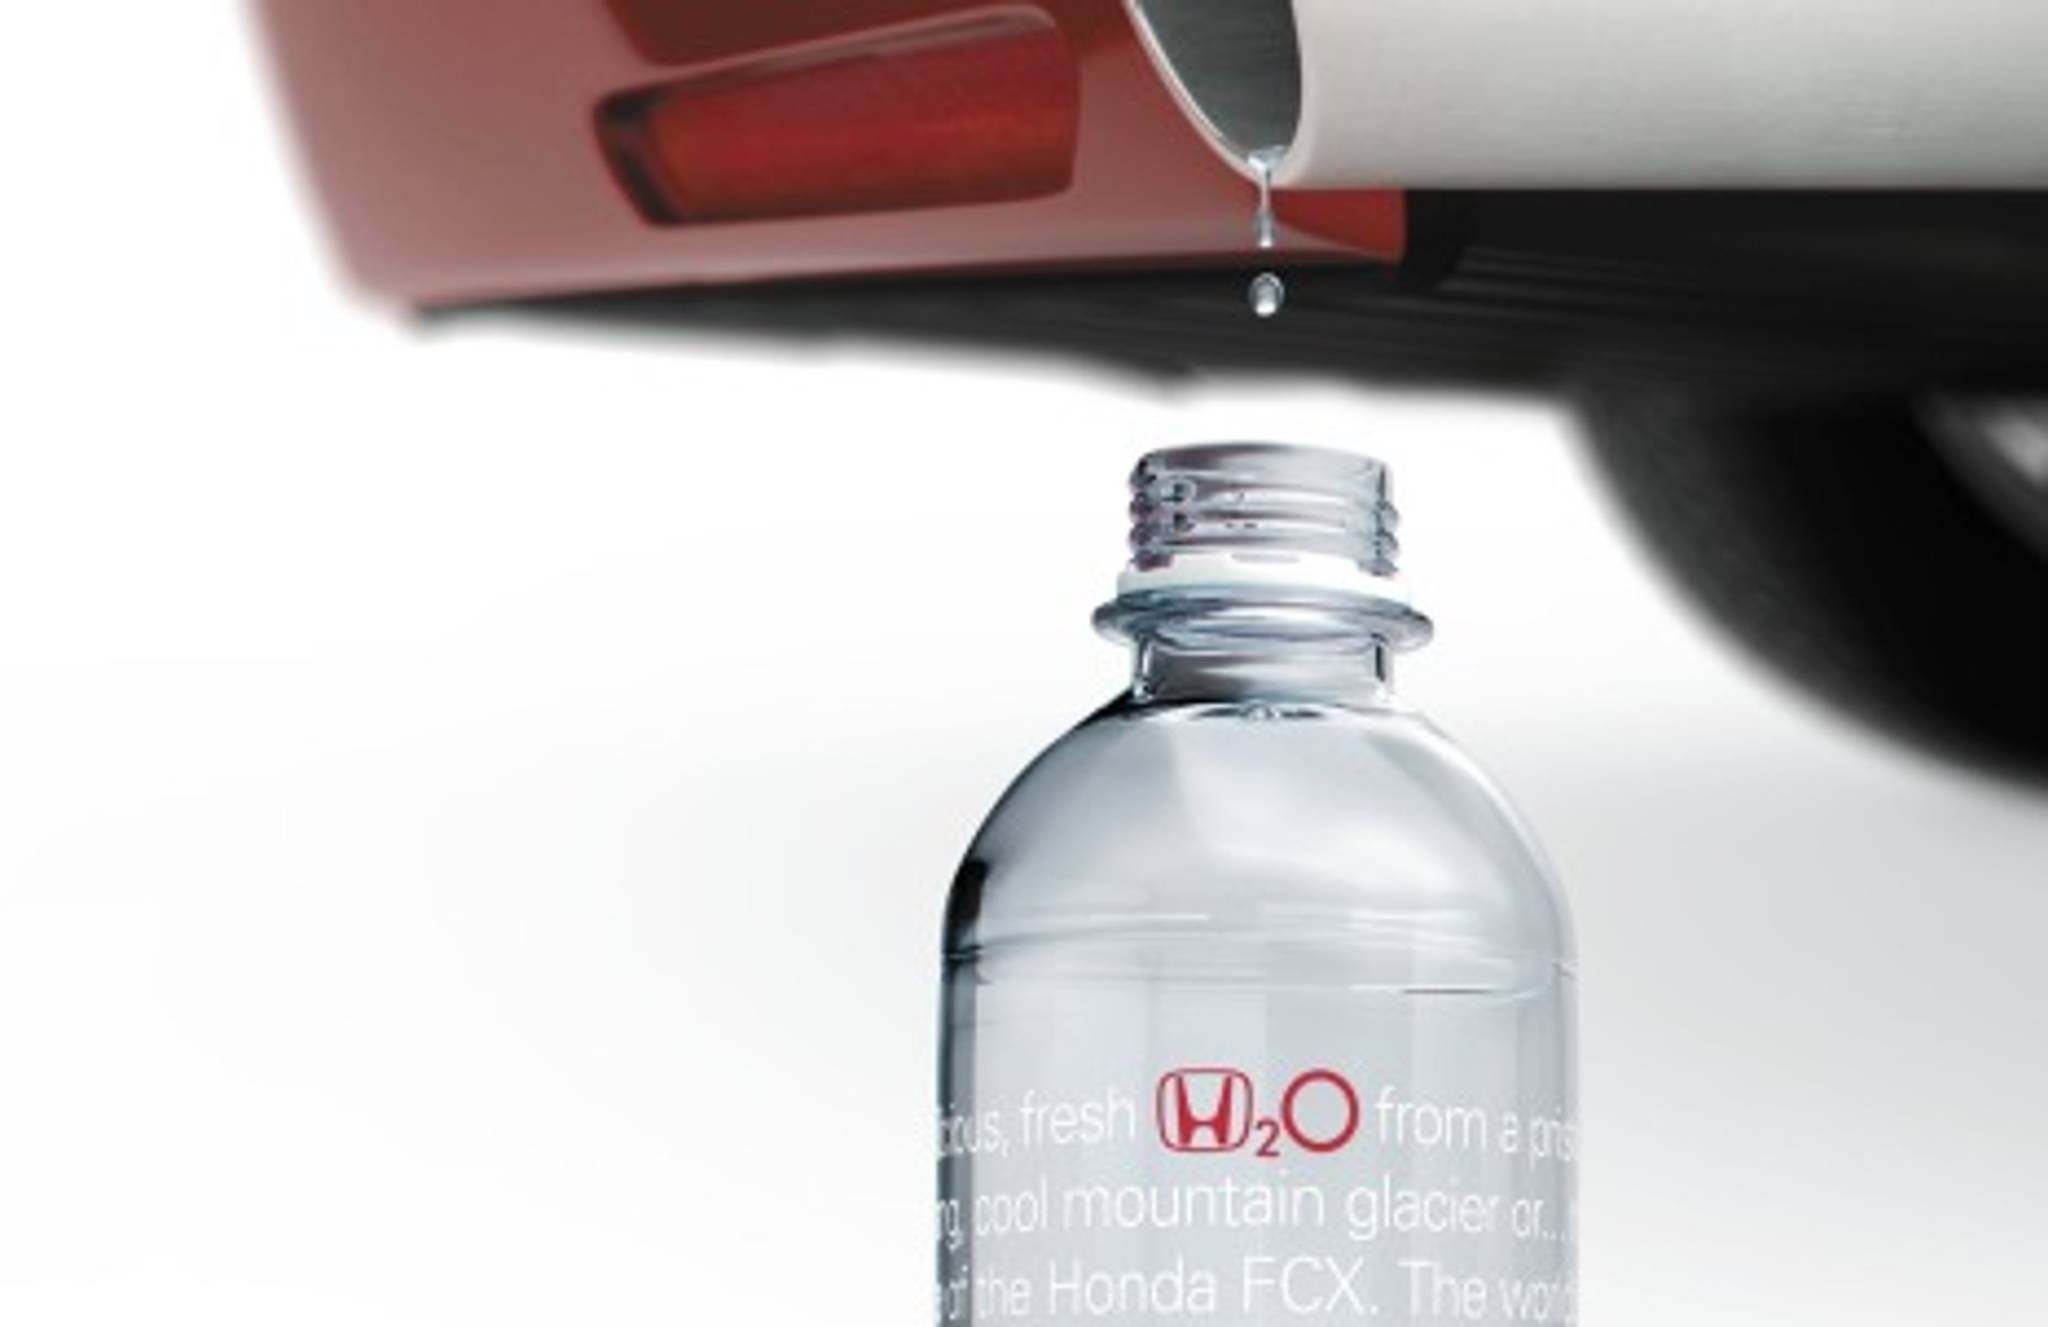 Honda launches bottled water brand